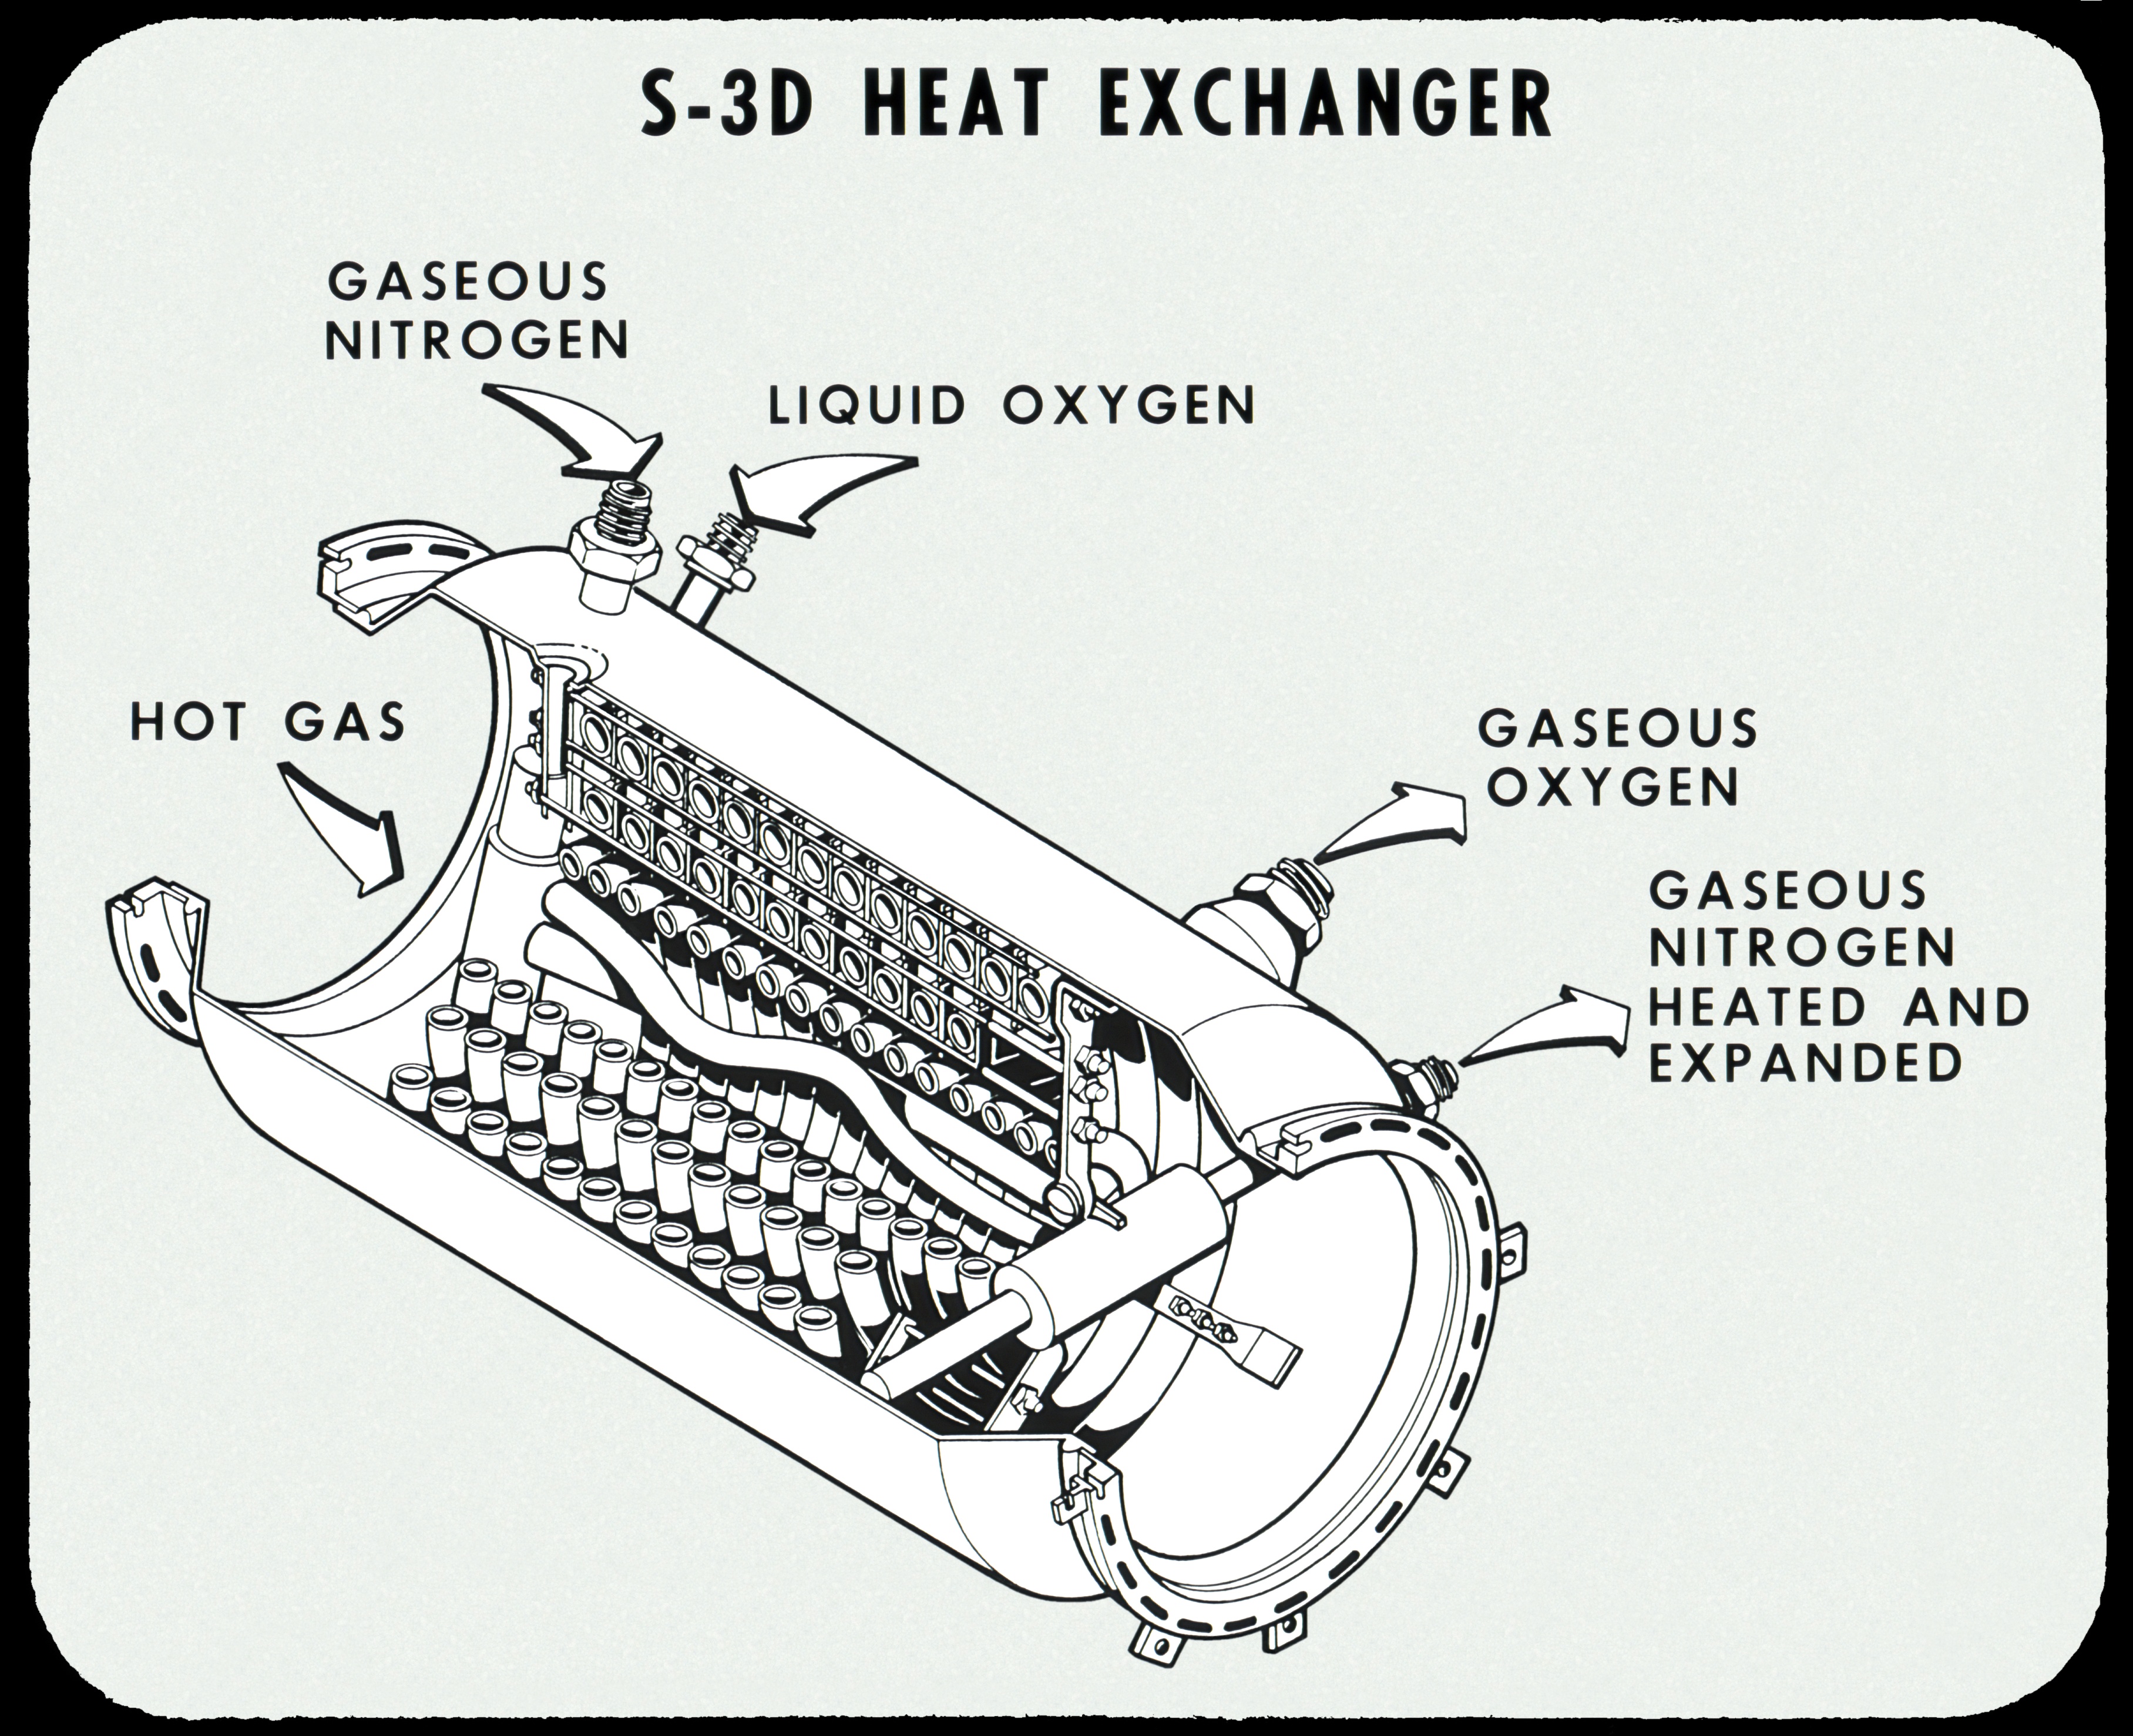 http://heroicrelics.org/info/s-3d/s-3d-heat-exchanger/s-3d-heat-exchanger-chrysler.jpg